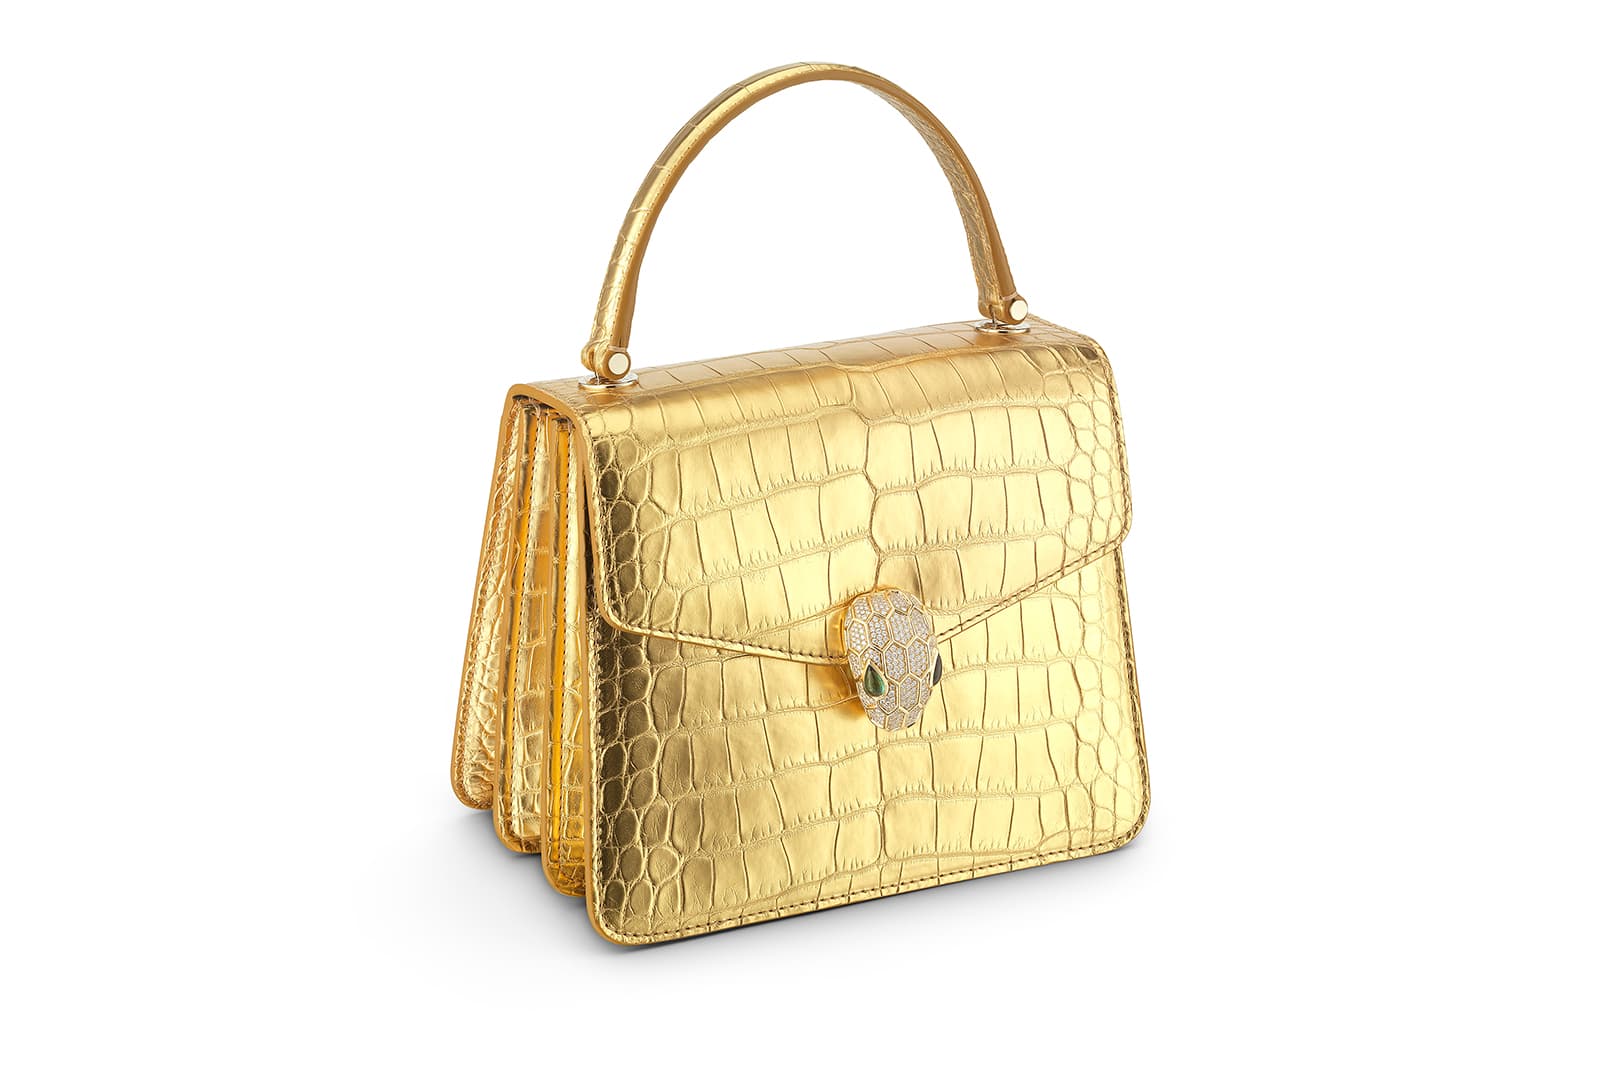 Bvlgari Gold Handbags